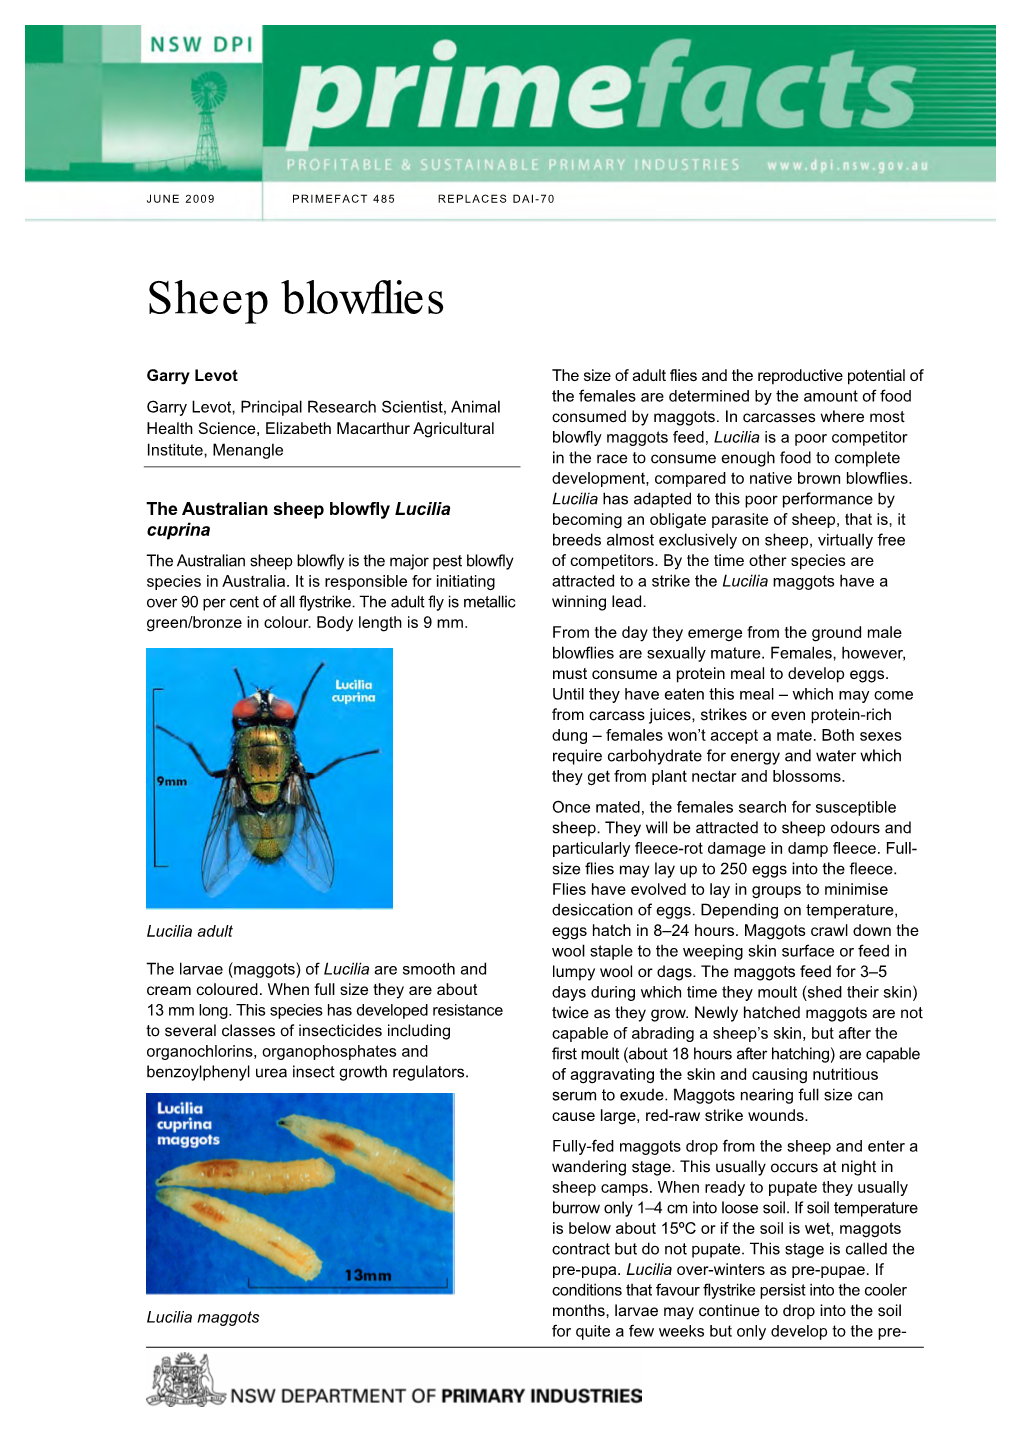 Sheep Blowflies